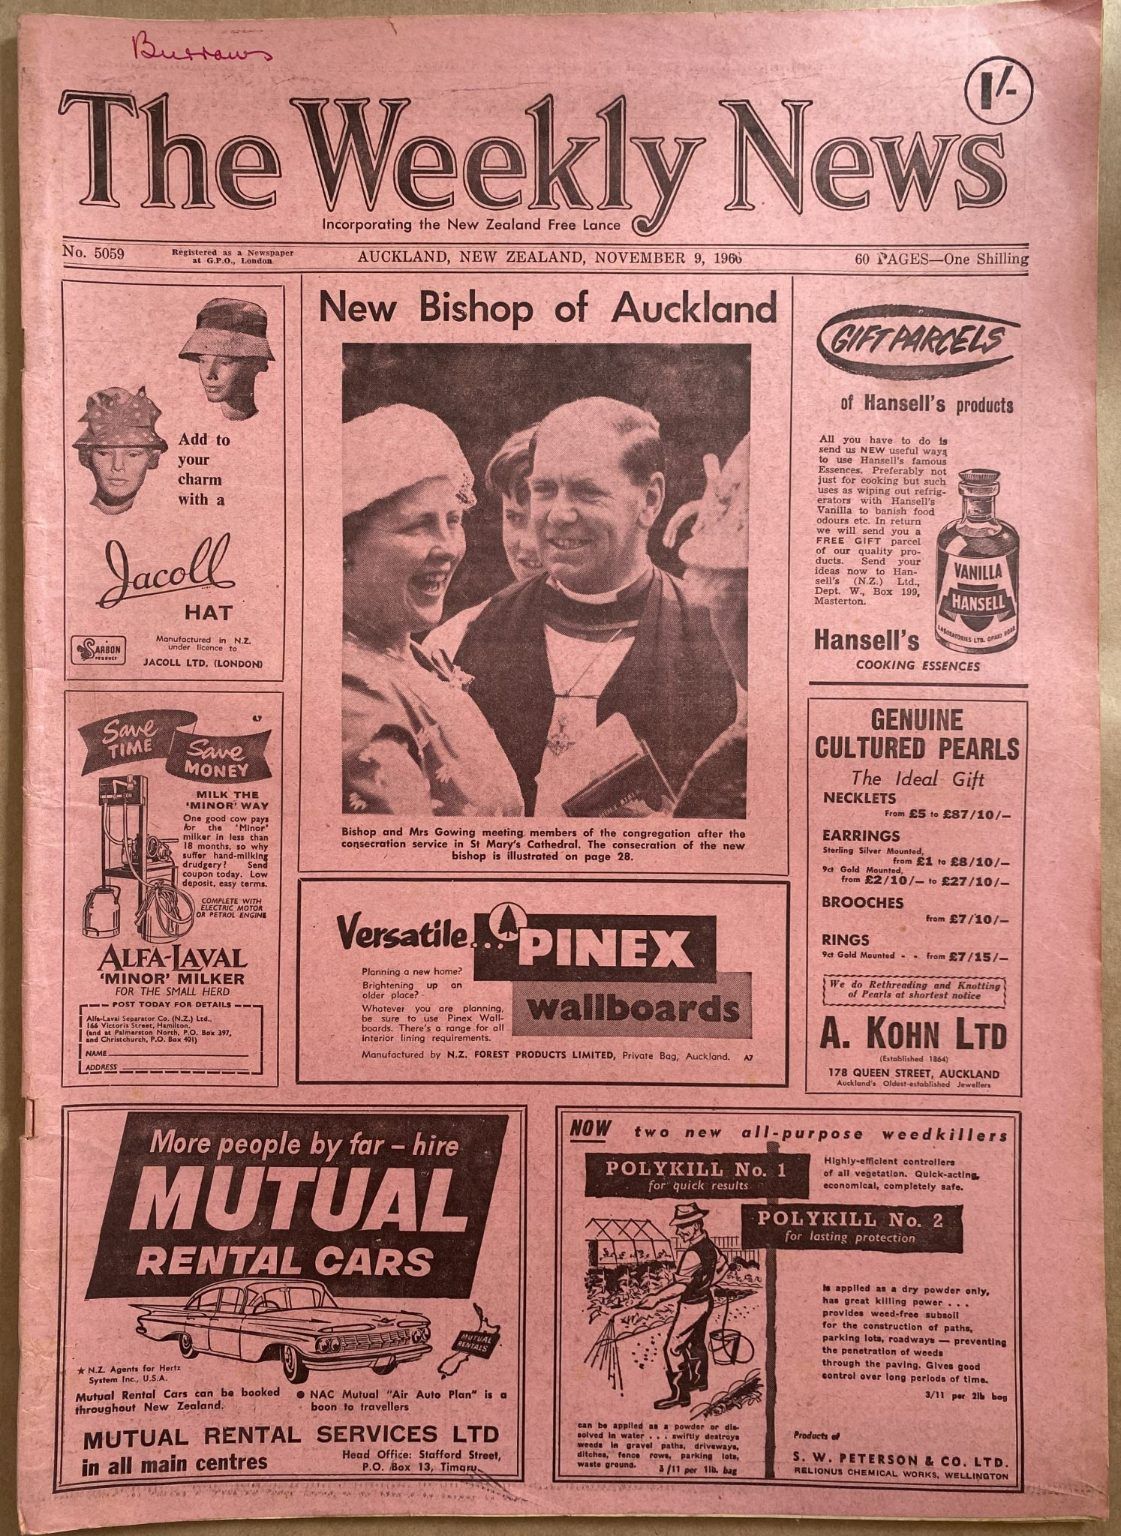 OLD NEWSPAPER: The Weekly News, No. 5059, 9 November 1960